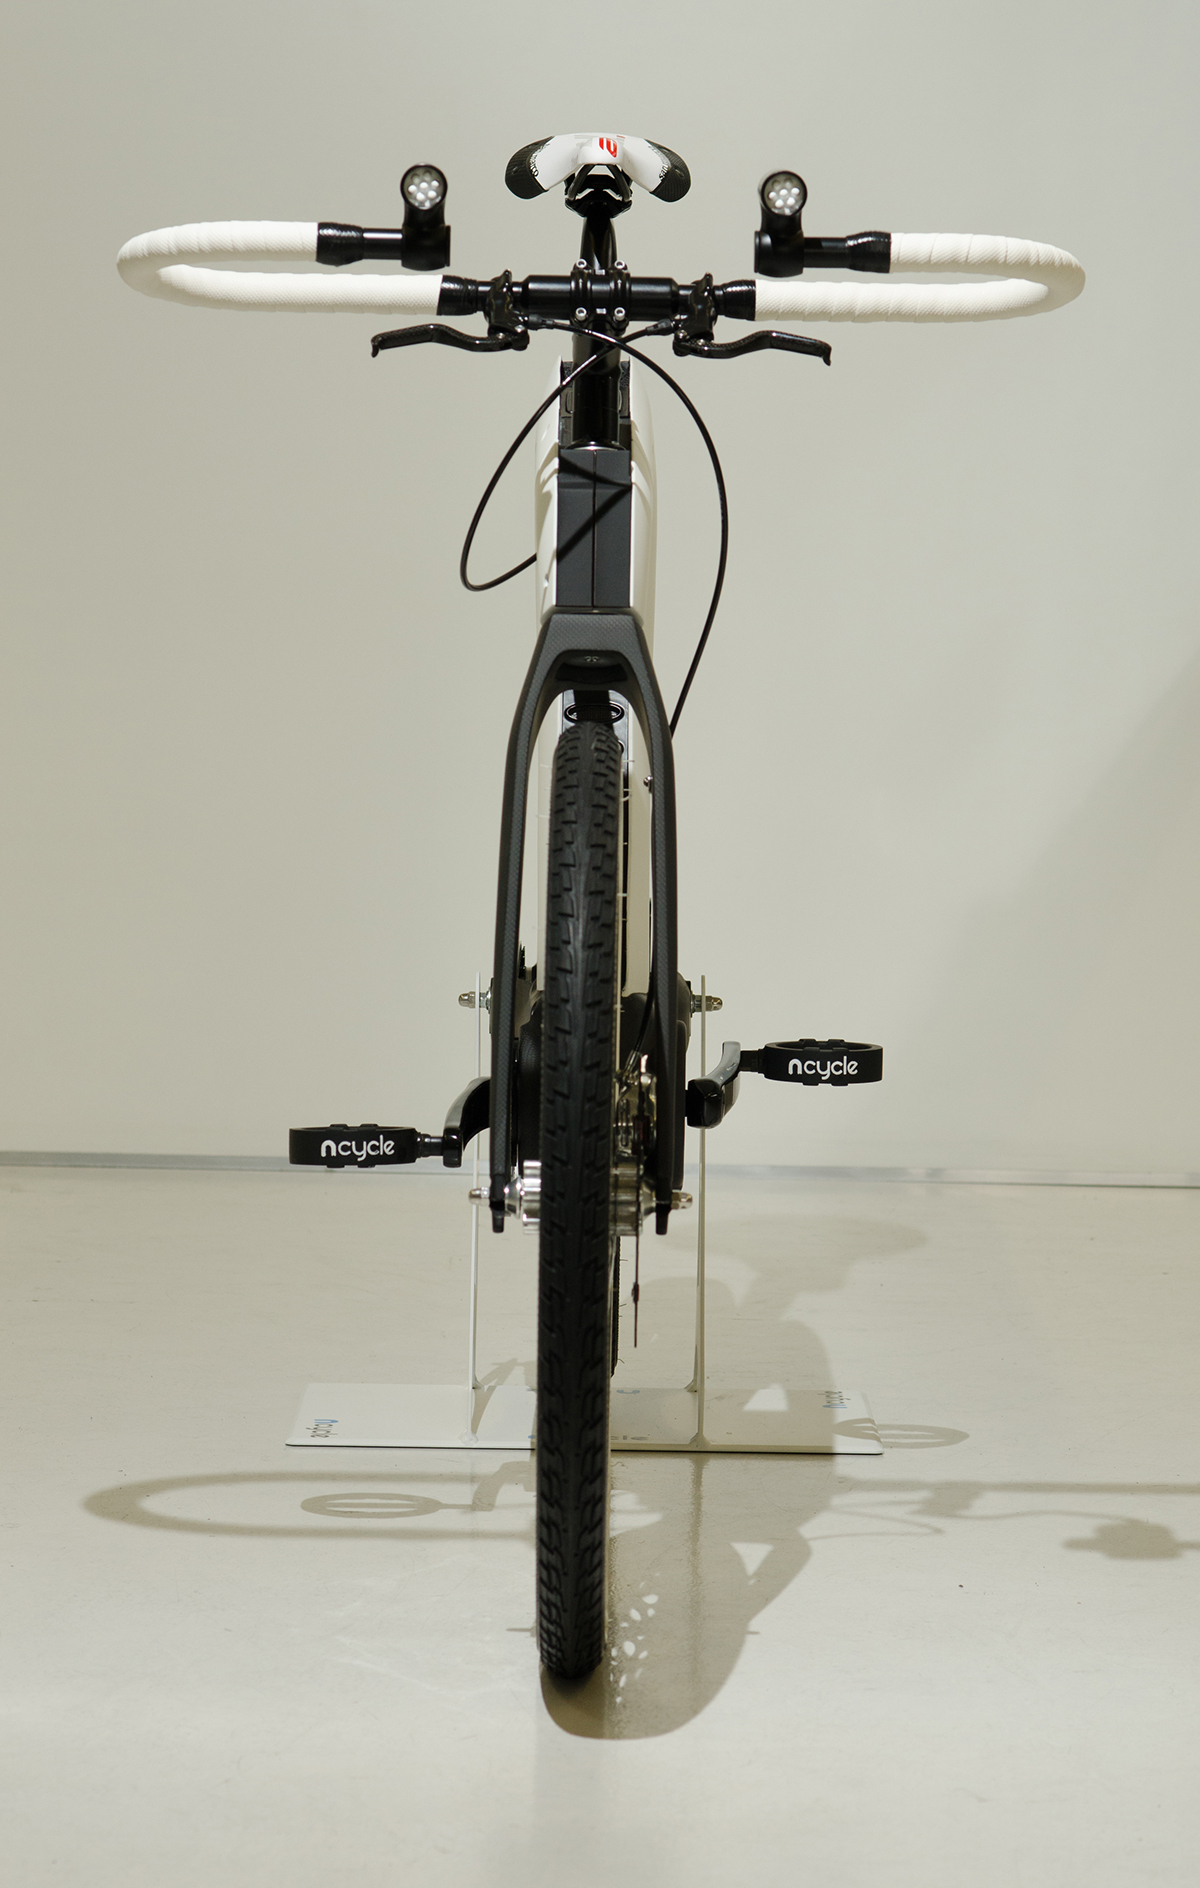 Bicycle cycle future tech concept Form Beautiful Playful Smart Bike Ebike Italy italia Bahrain Albania